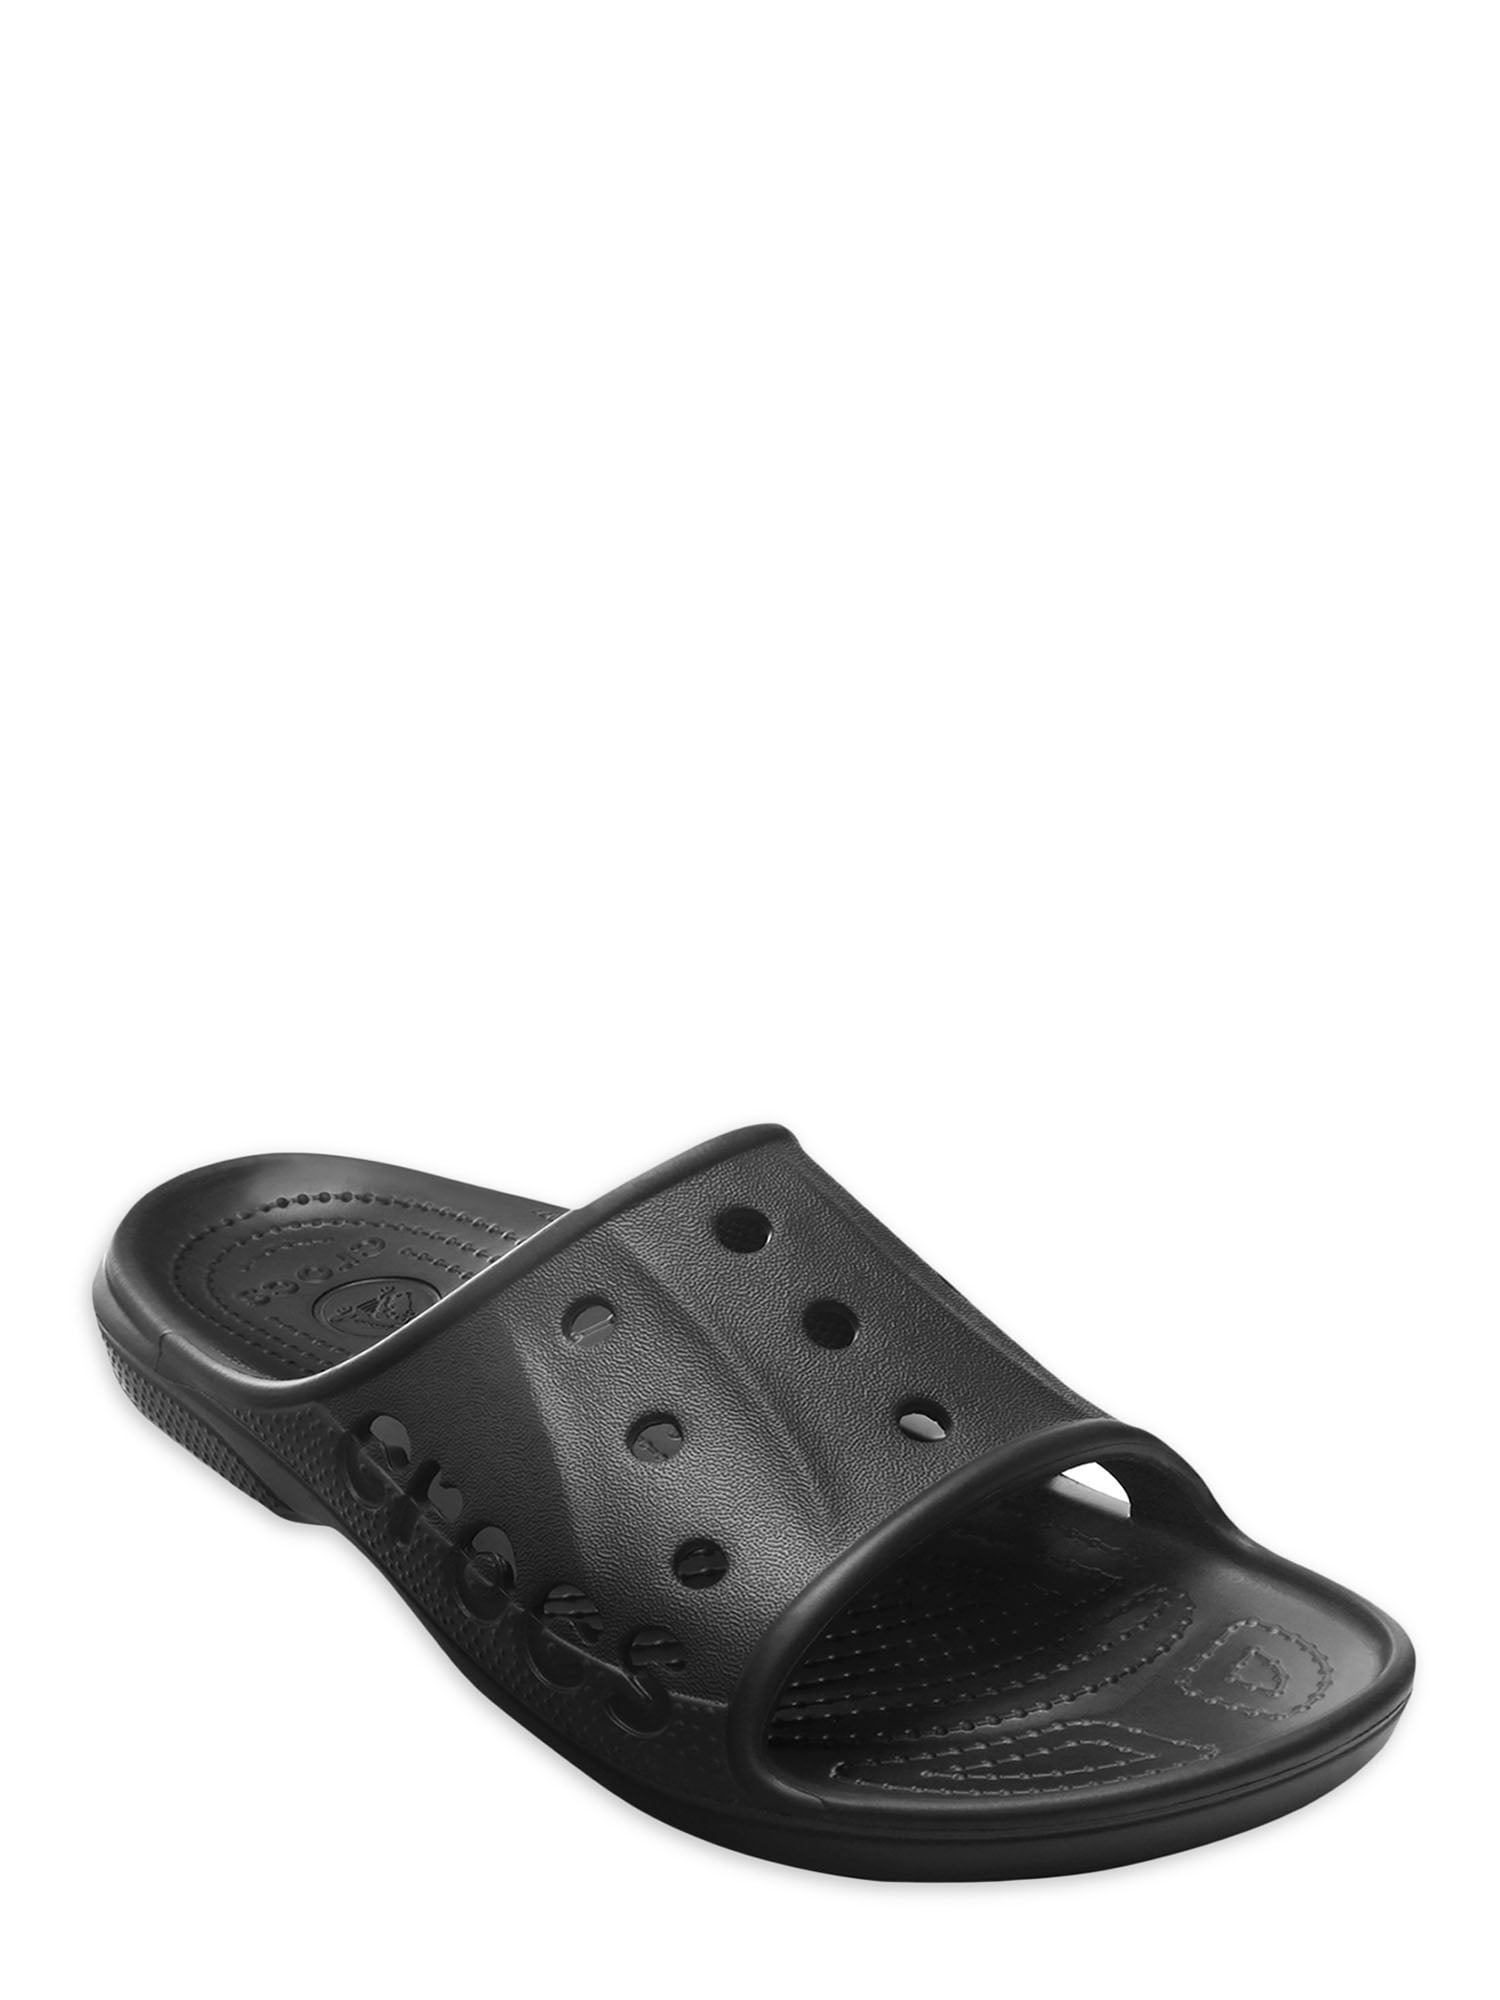 Crocs Unisex Baya Slide Sandal - Walmart.com